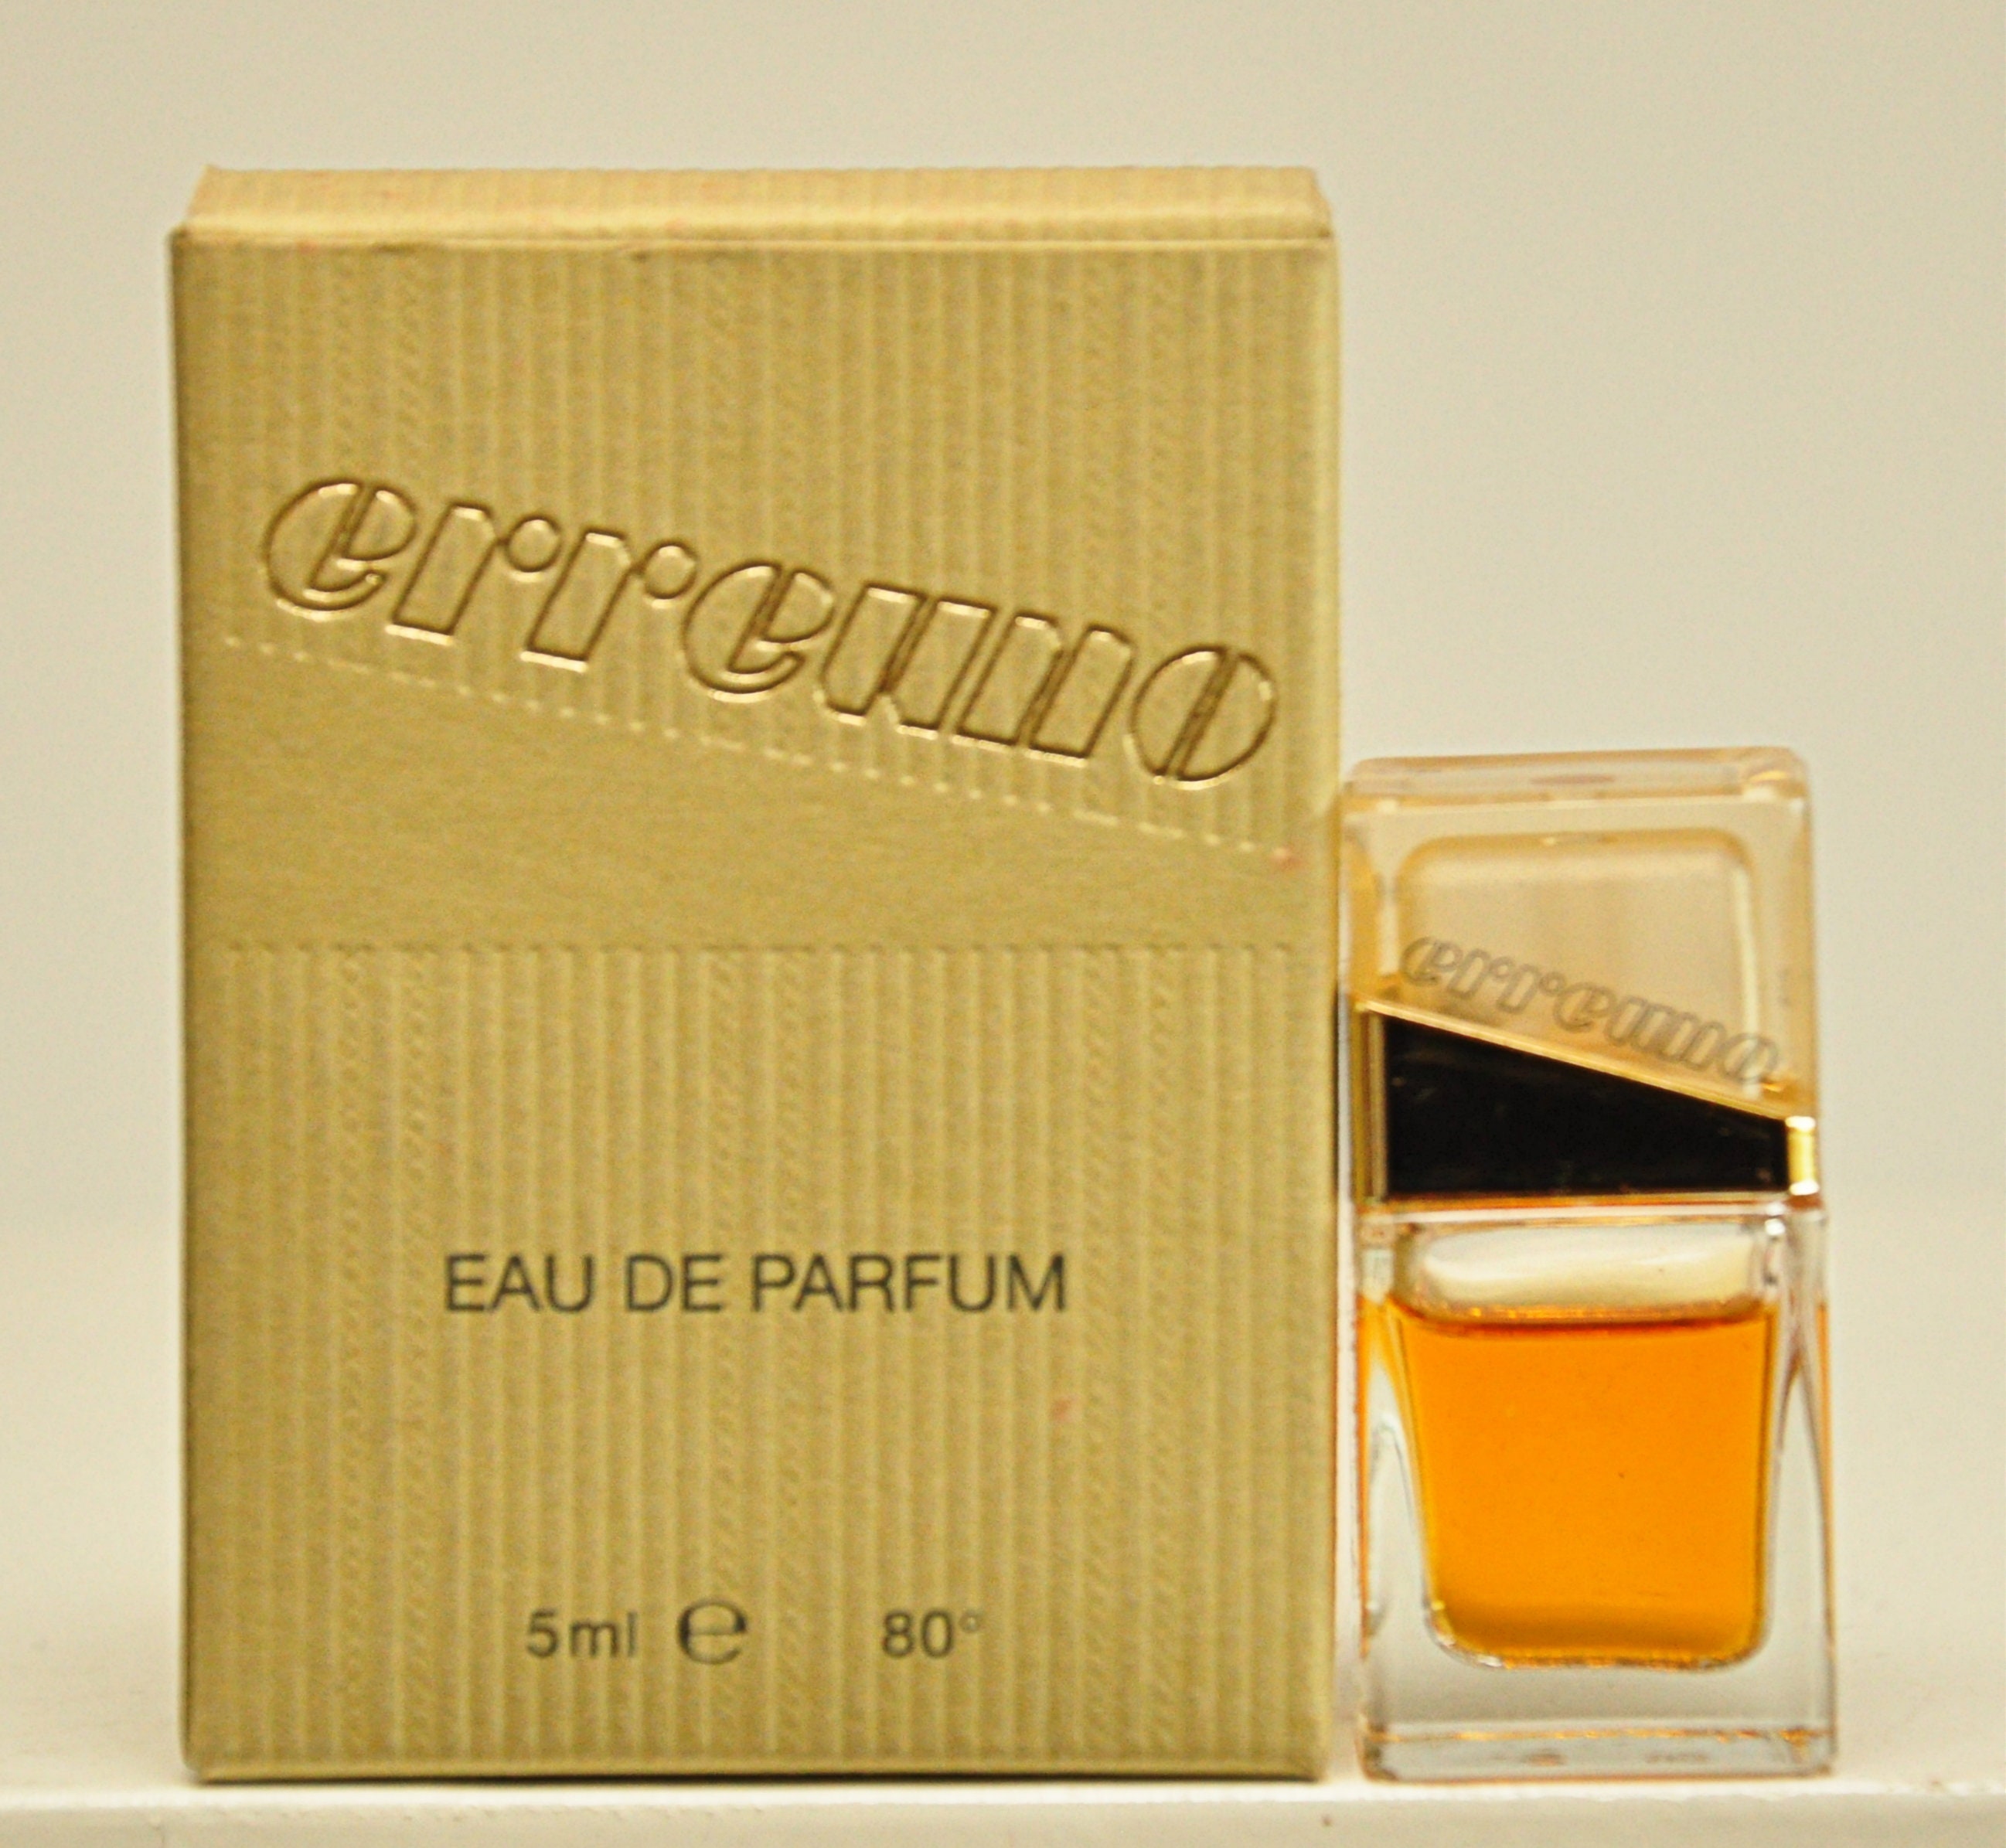 Erreuno di Erreuno Eau de Parfum Edp 5ml 0.17 Fl. Oz. - Etsy 日本